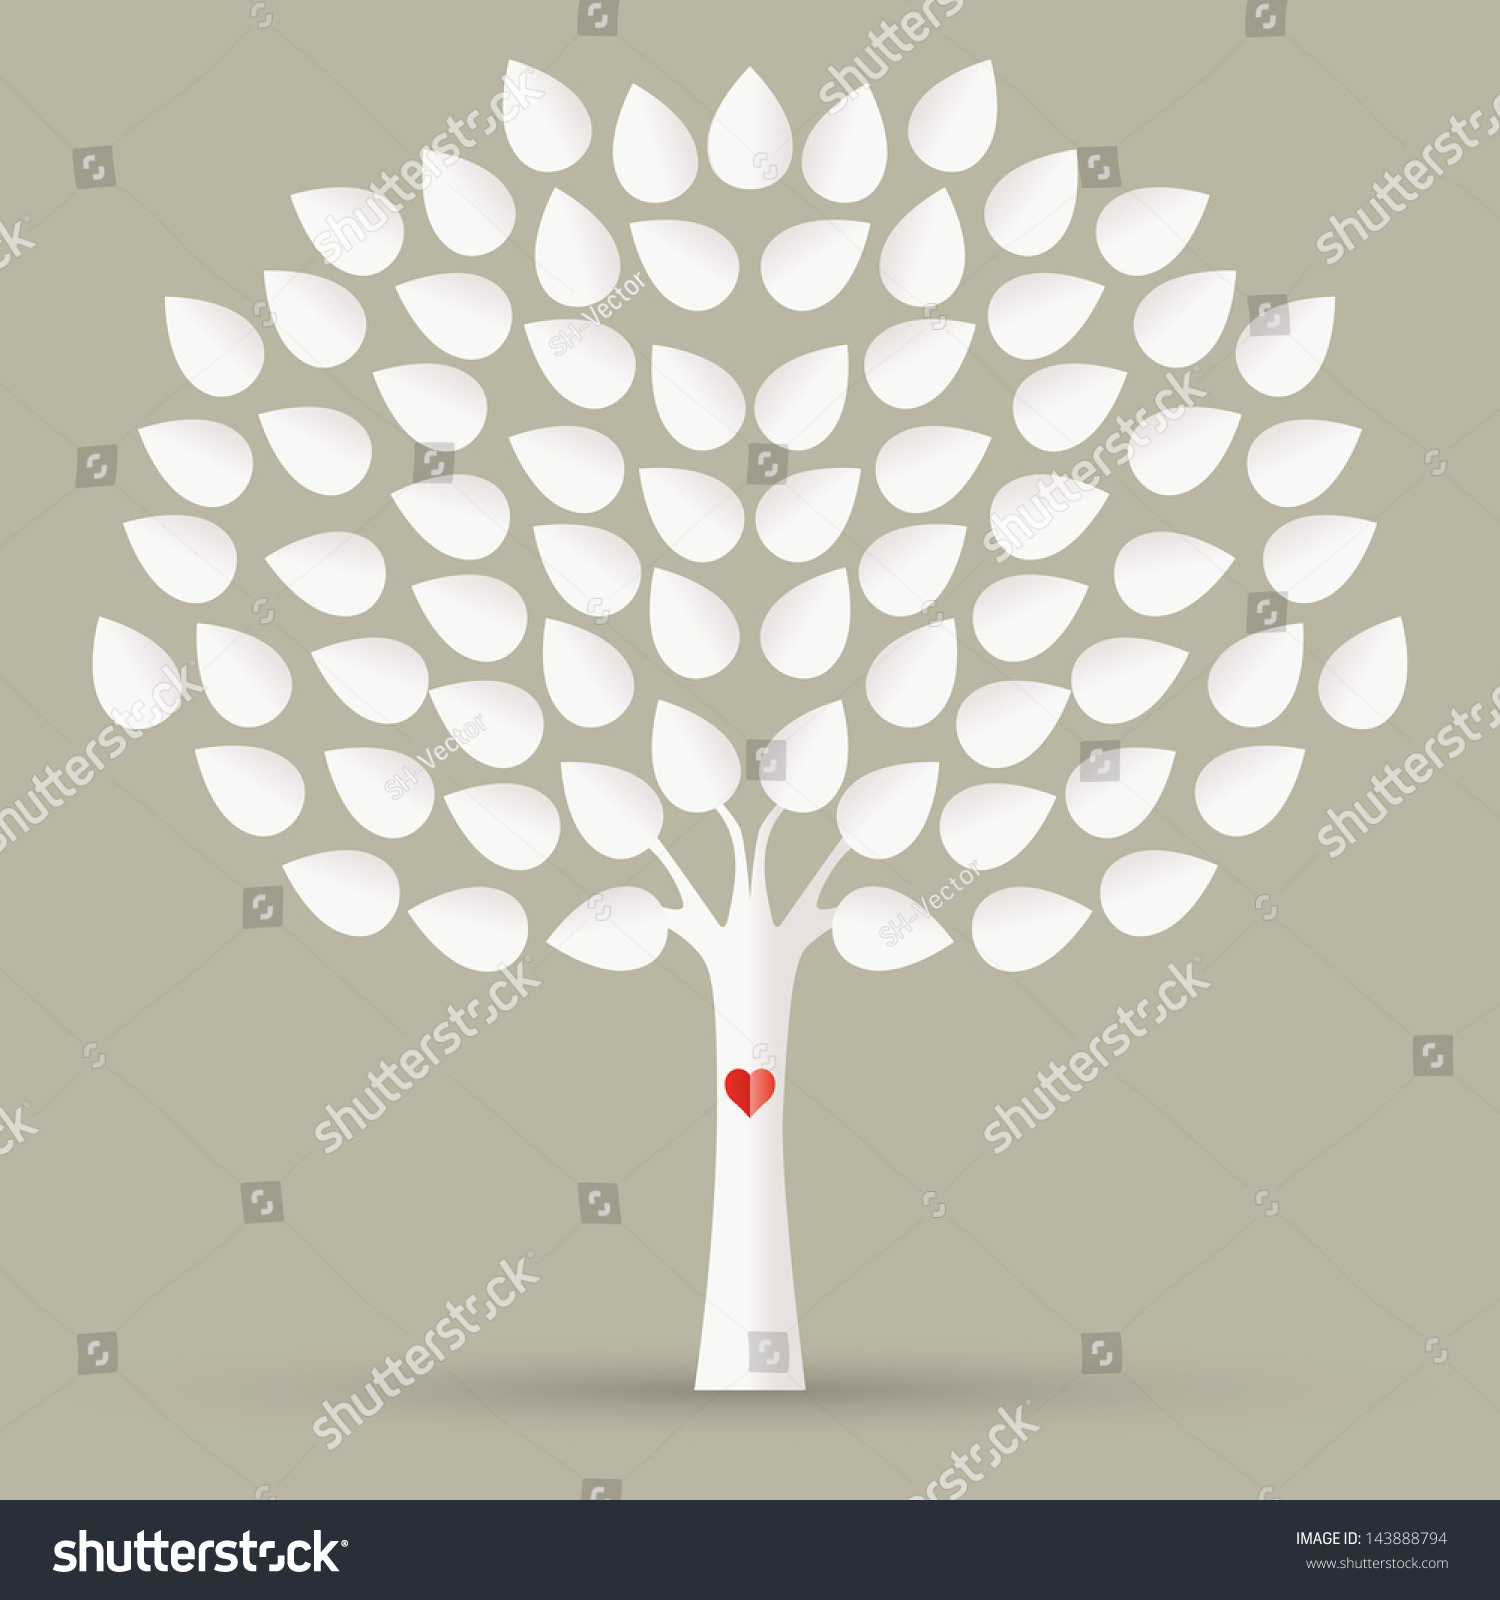 Tree Silhouette Stock Vector Illustration 143888794 : Shutterstock